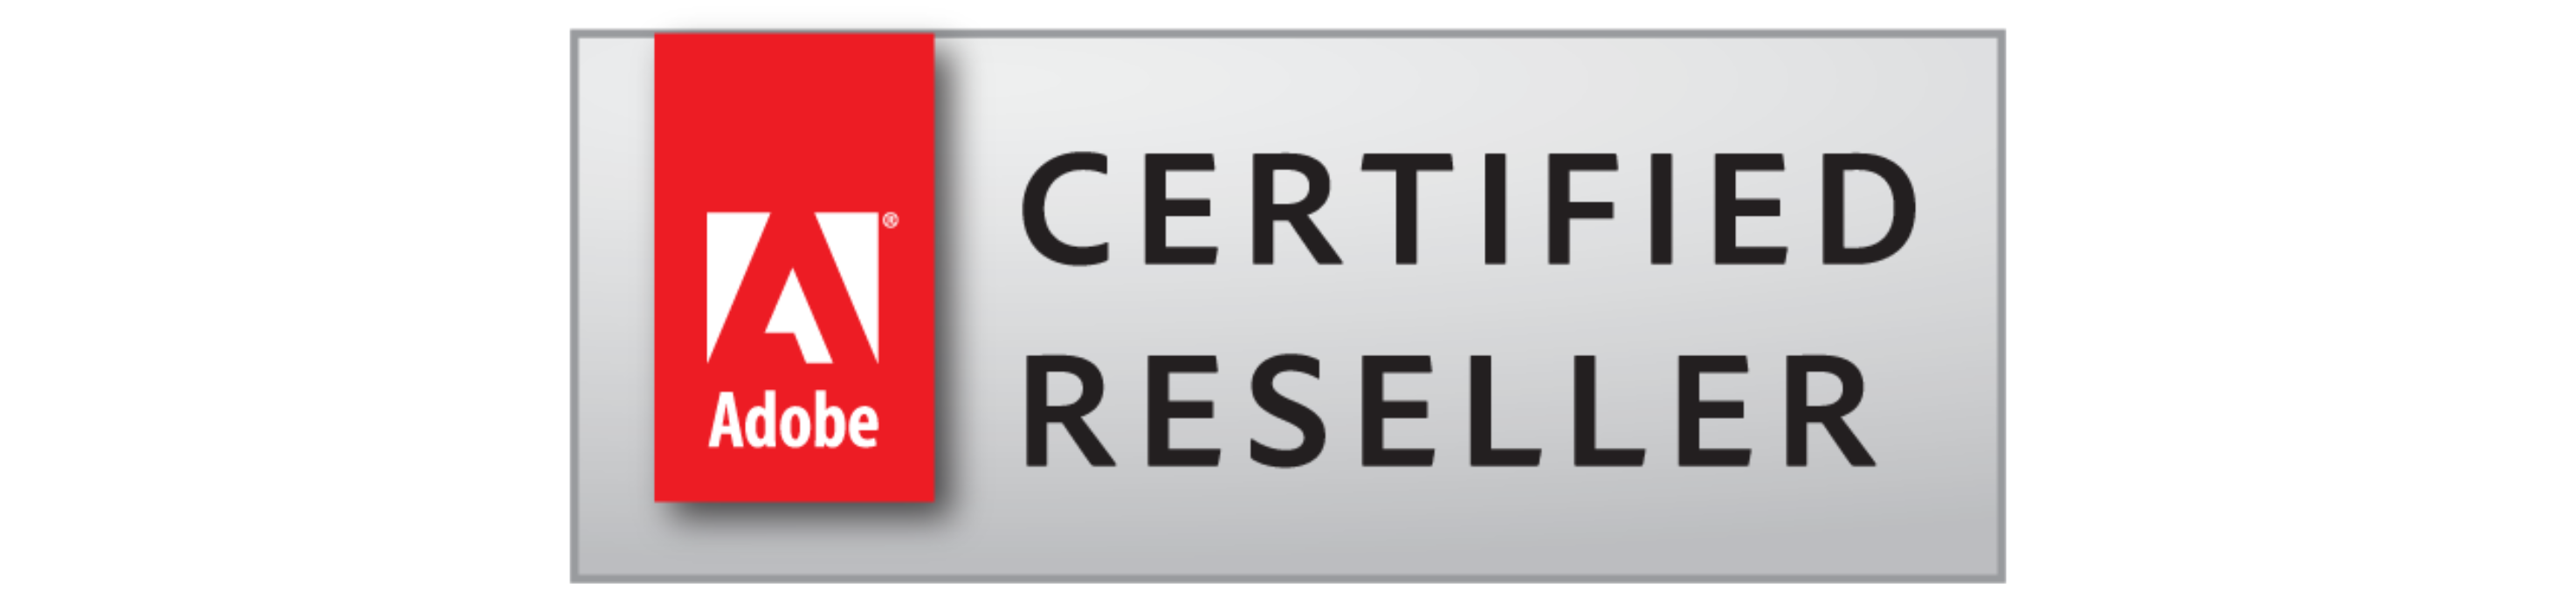 Adobe Certified Reseller - New Zealand